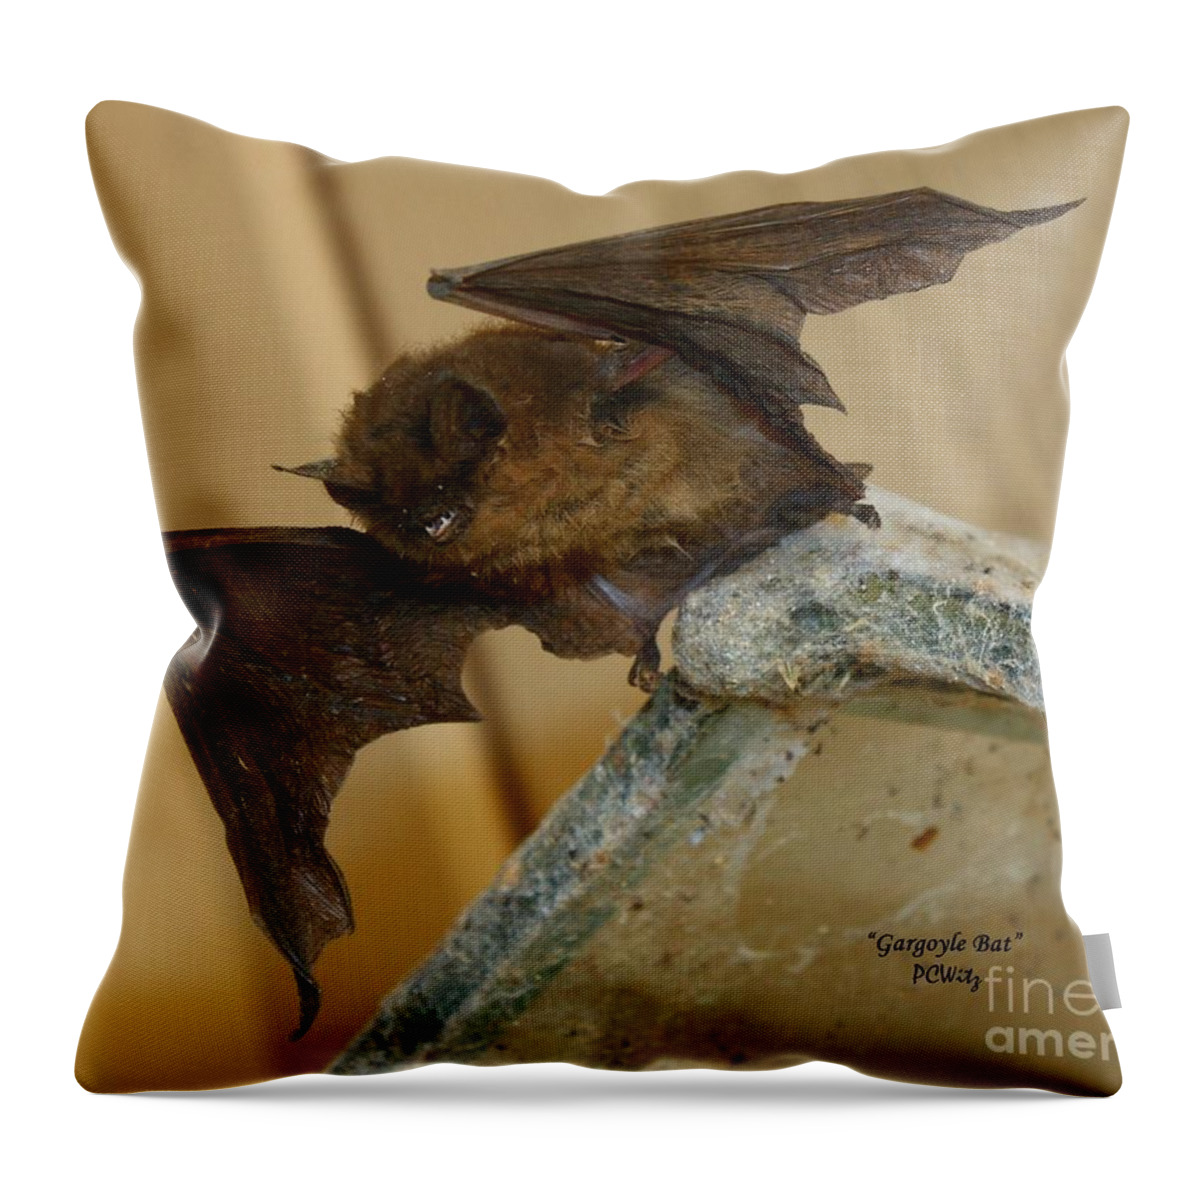 Gargoyle Bat Throw Pillow featuring the photograph Gargoyle Bat by Patrick Witz